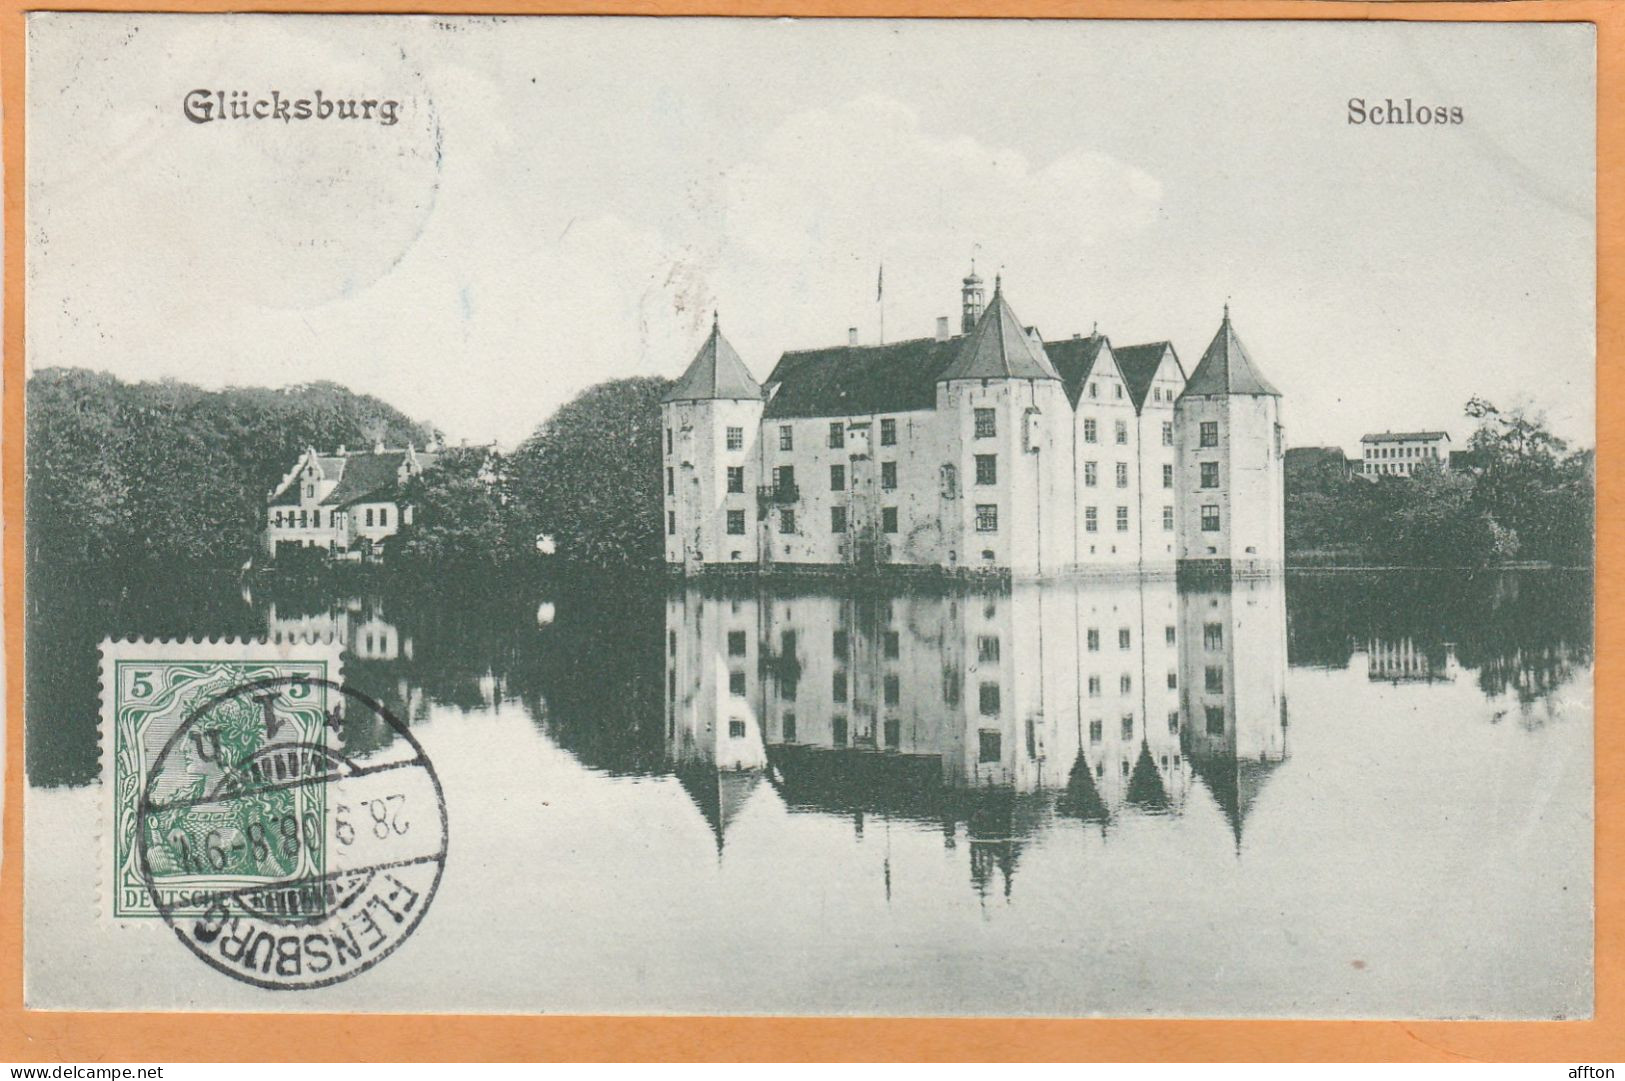 Glucksburg Germany 1908 Postcard - Glücksburg